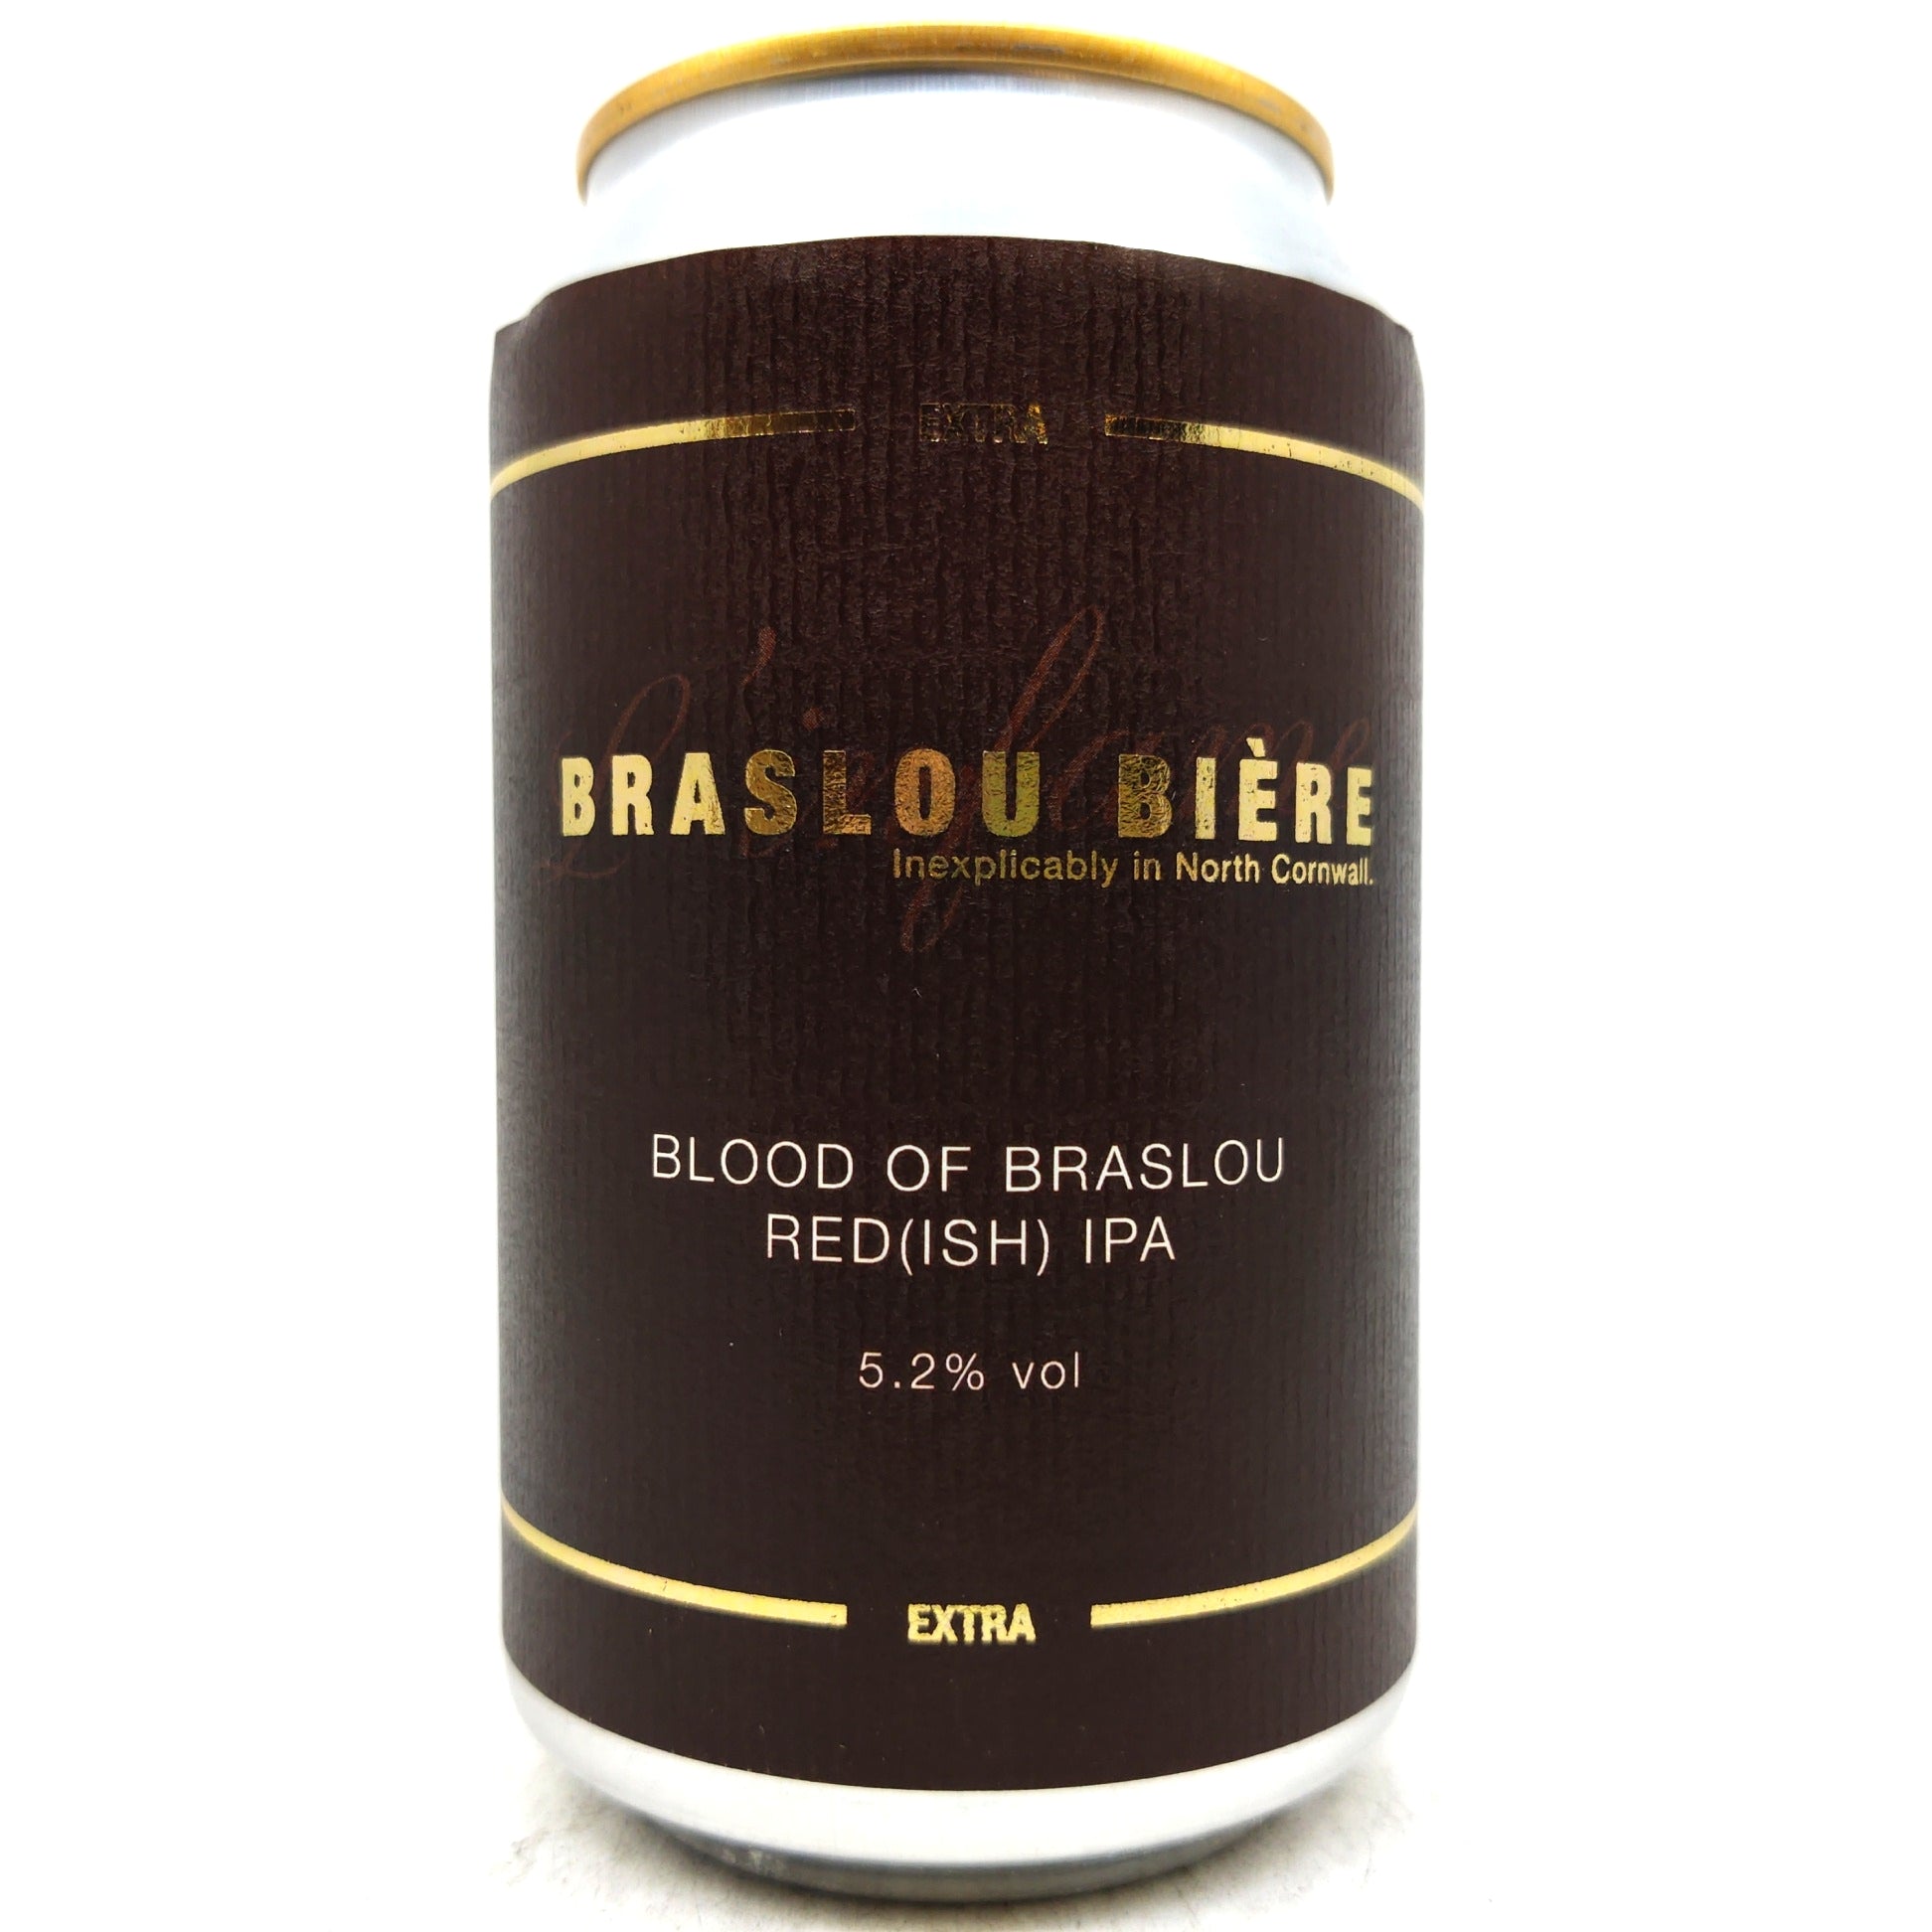 Braslou Biere Blood Of Braslou Red(dish) IPA 5.2% (330ml can)-Hop Burns & Black